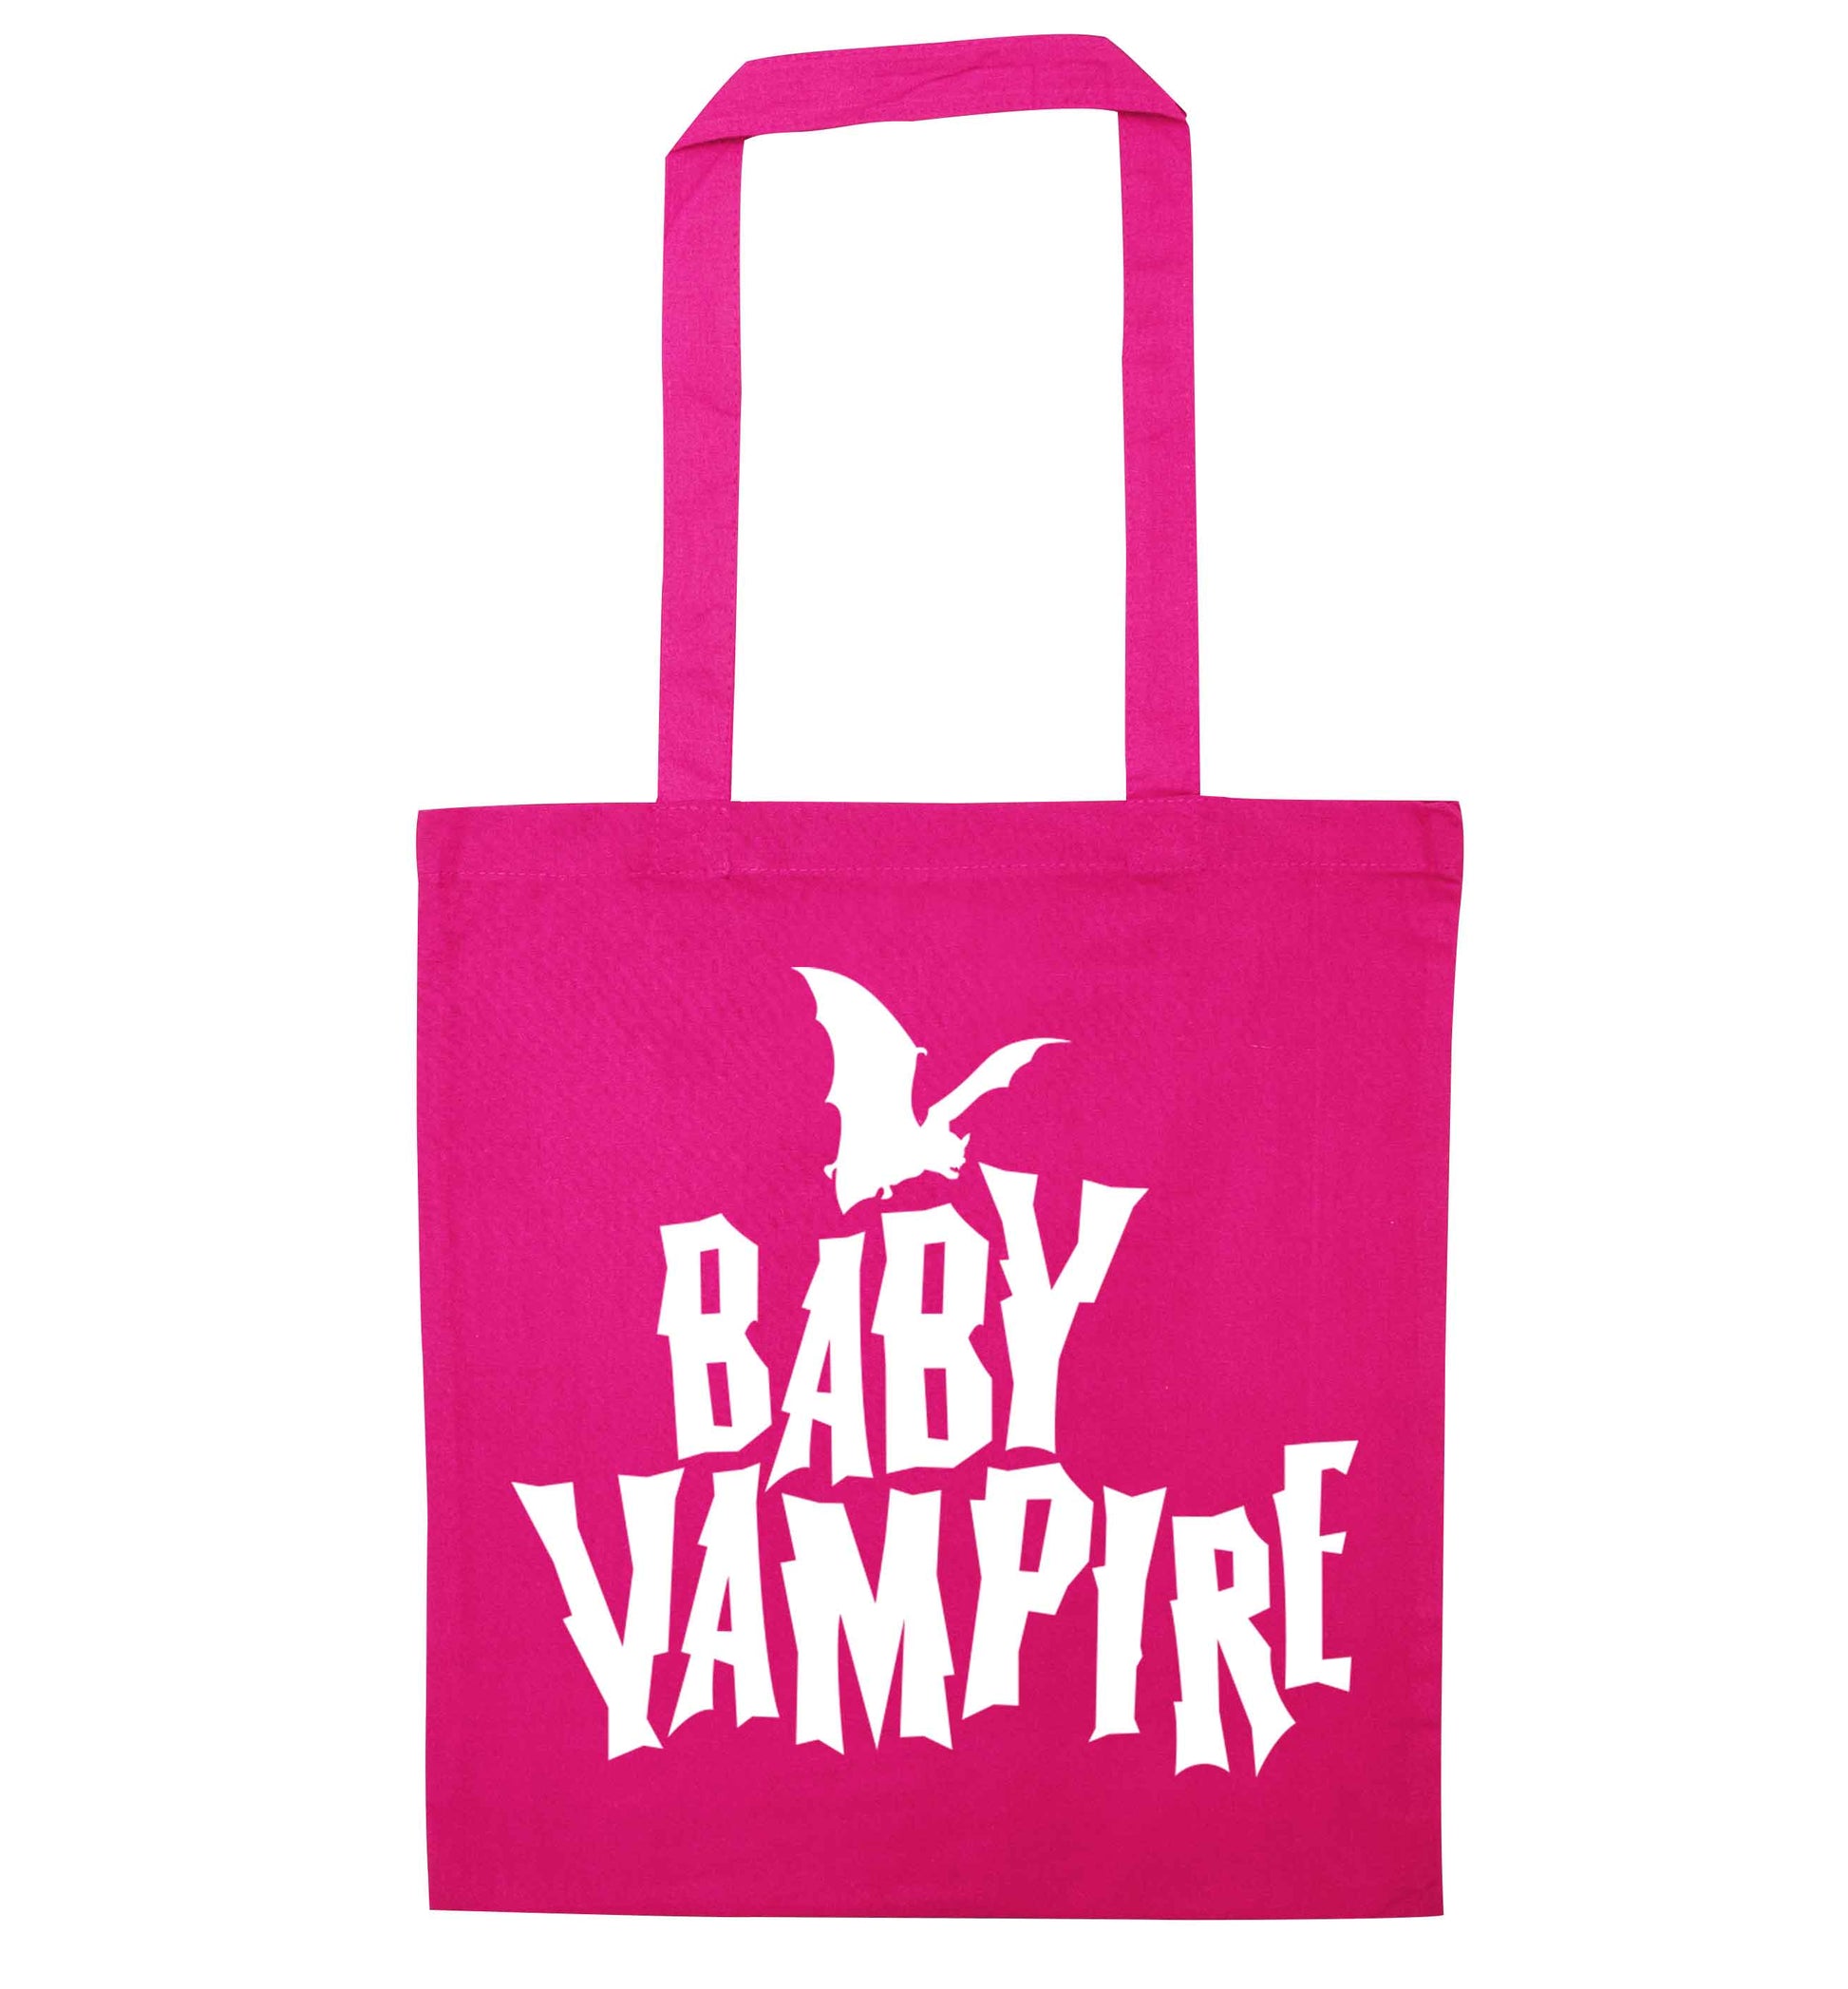 Baby vampire pink tote bag